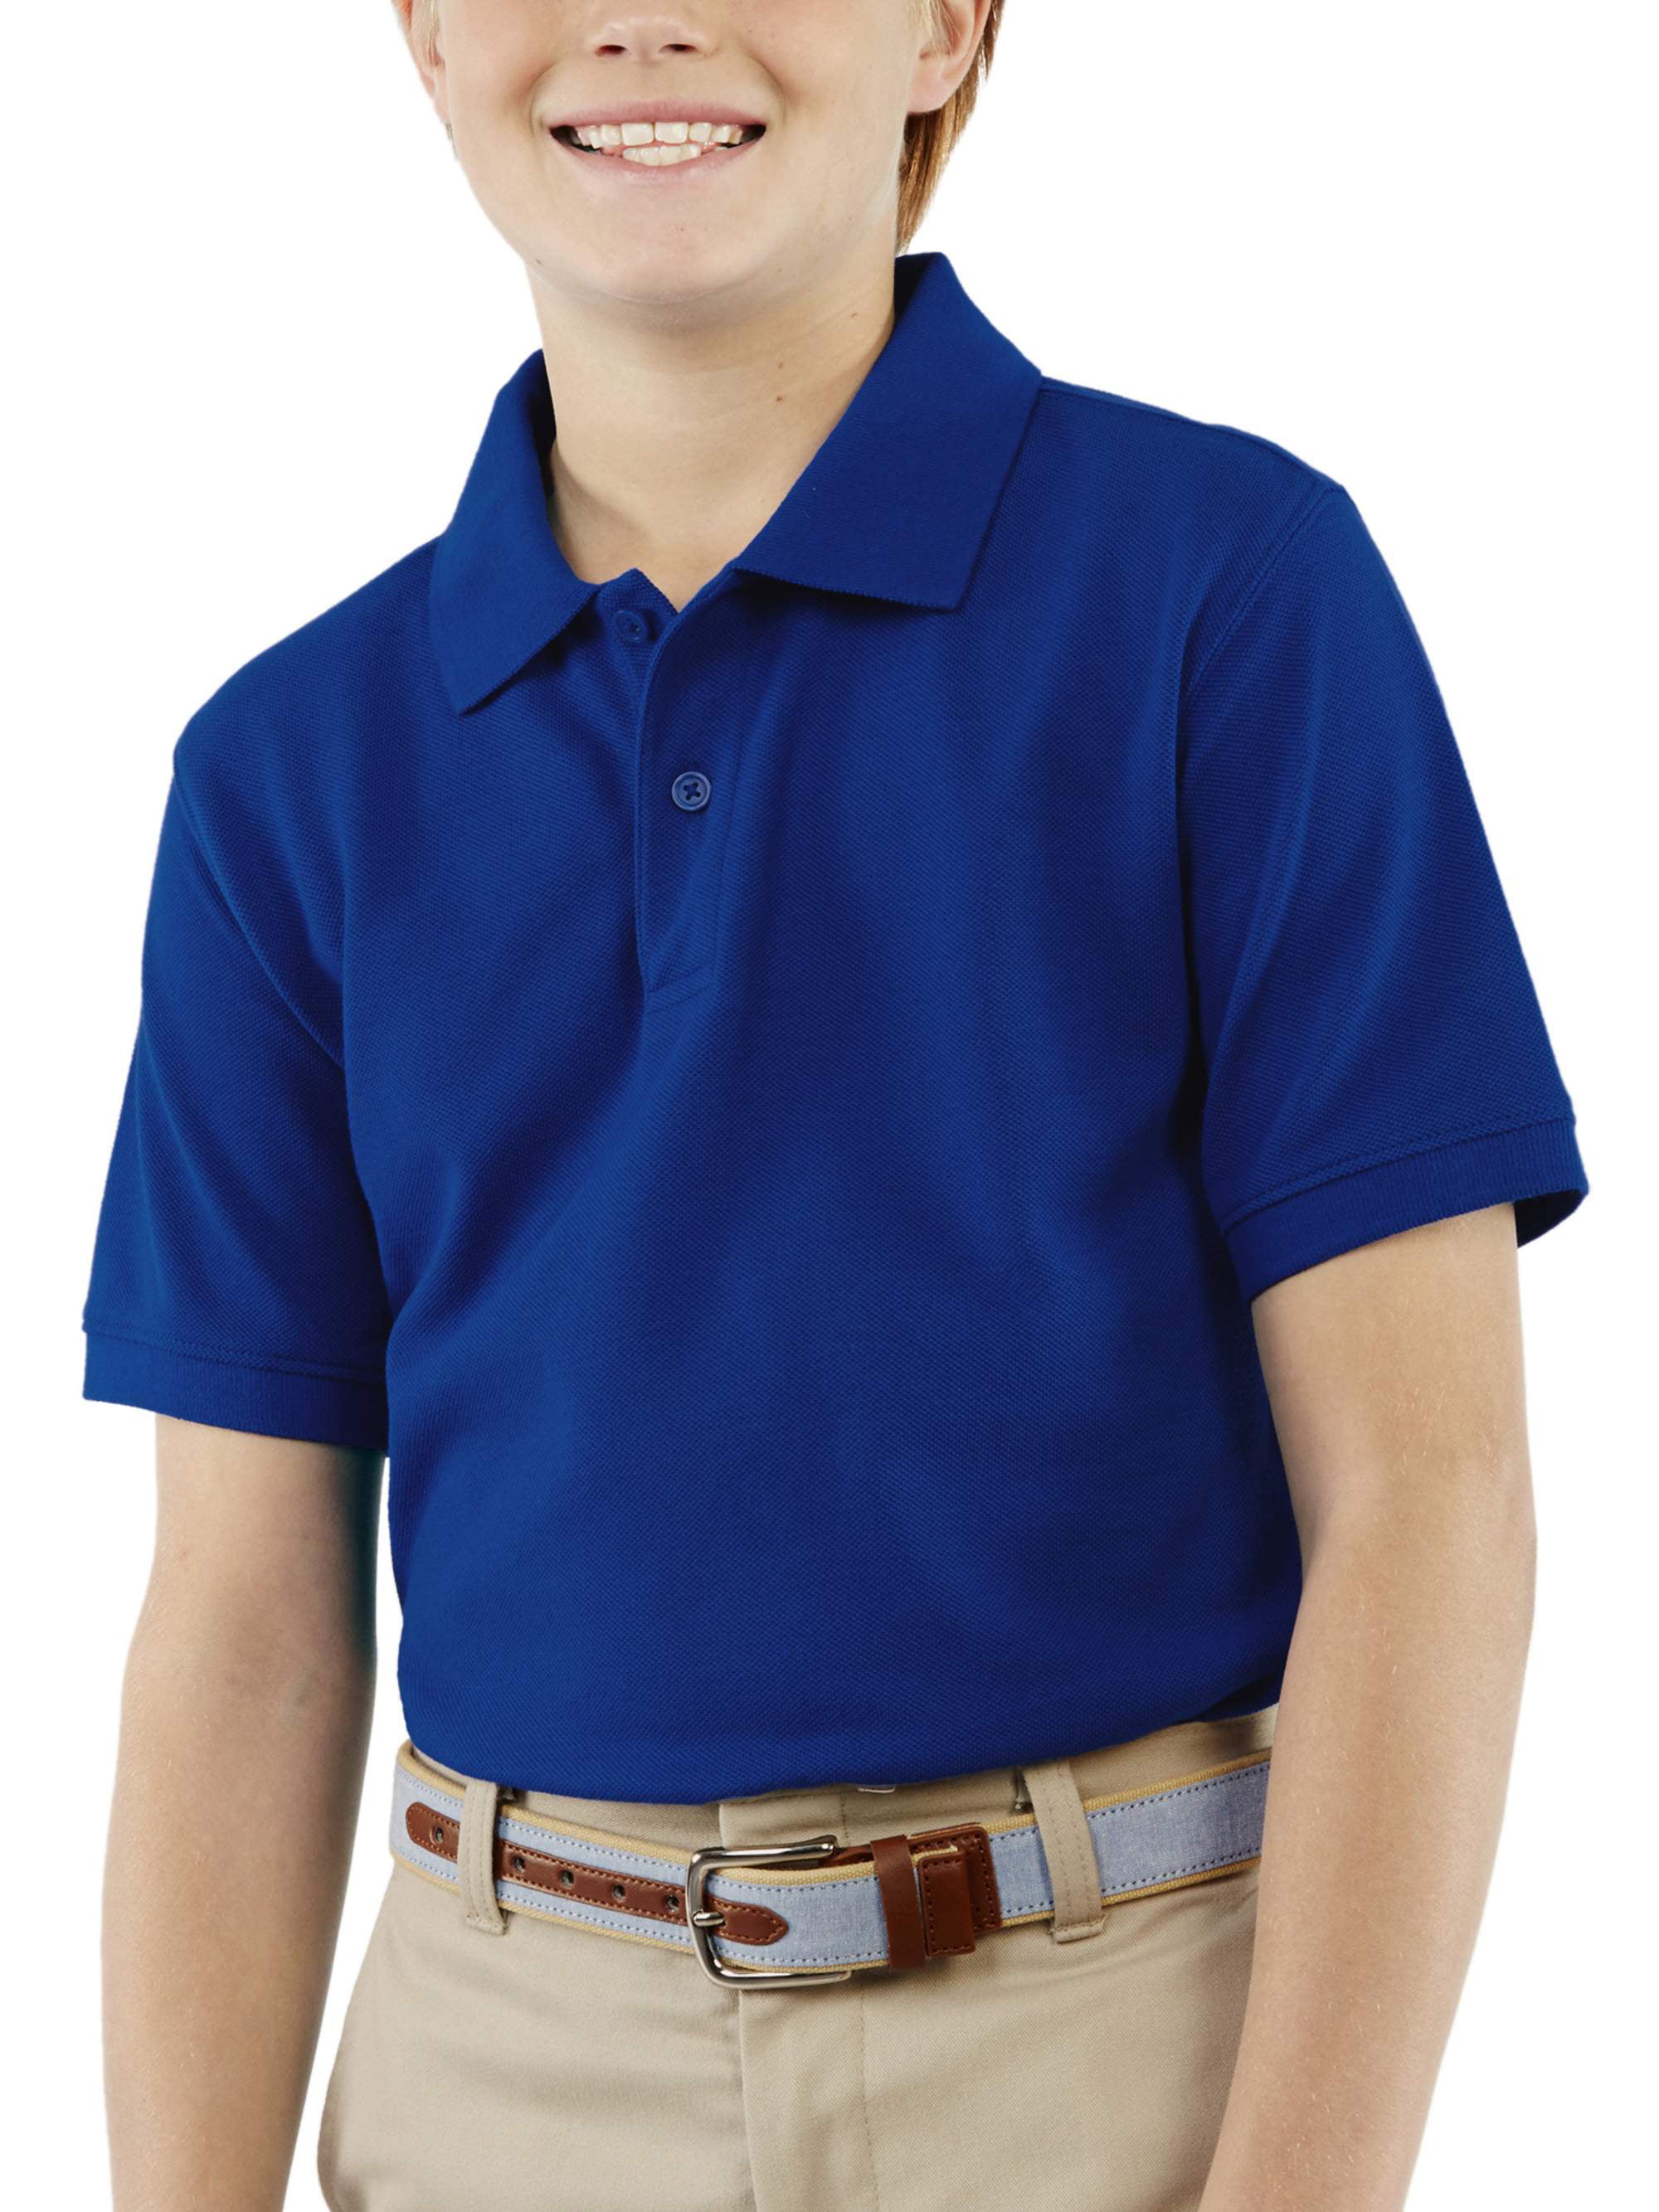 Школьная форма с рубашкой поло. Navy short Sleeve Polo Shirt Kids. Polo Shirt boy. George School Polo Shirt boy Blue. Boys polo